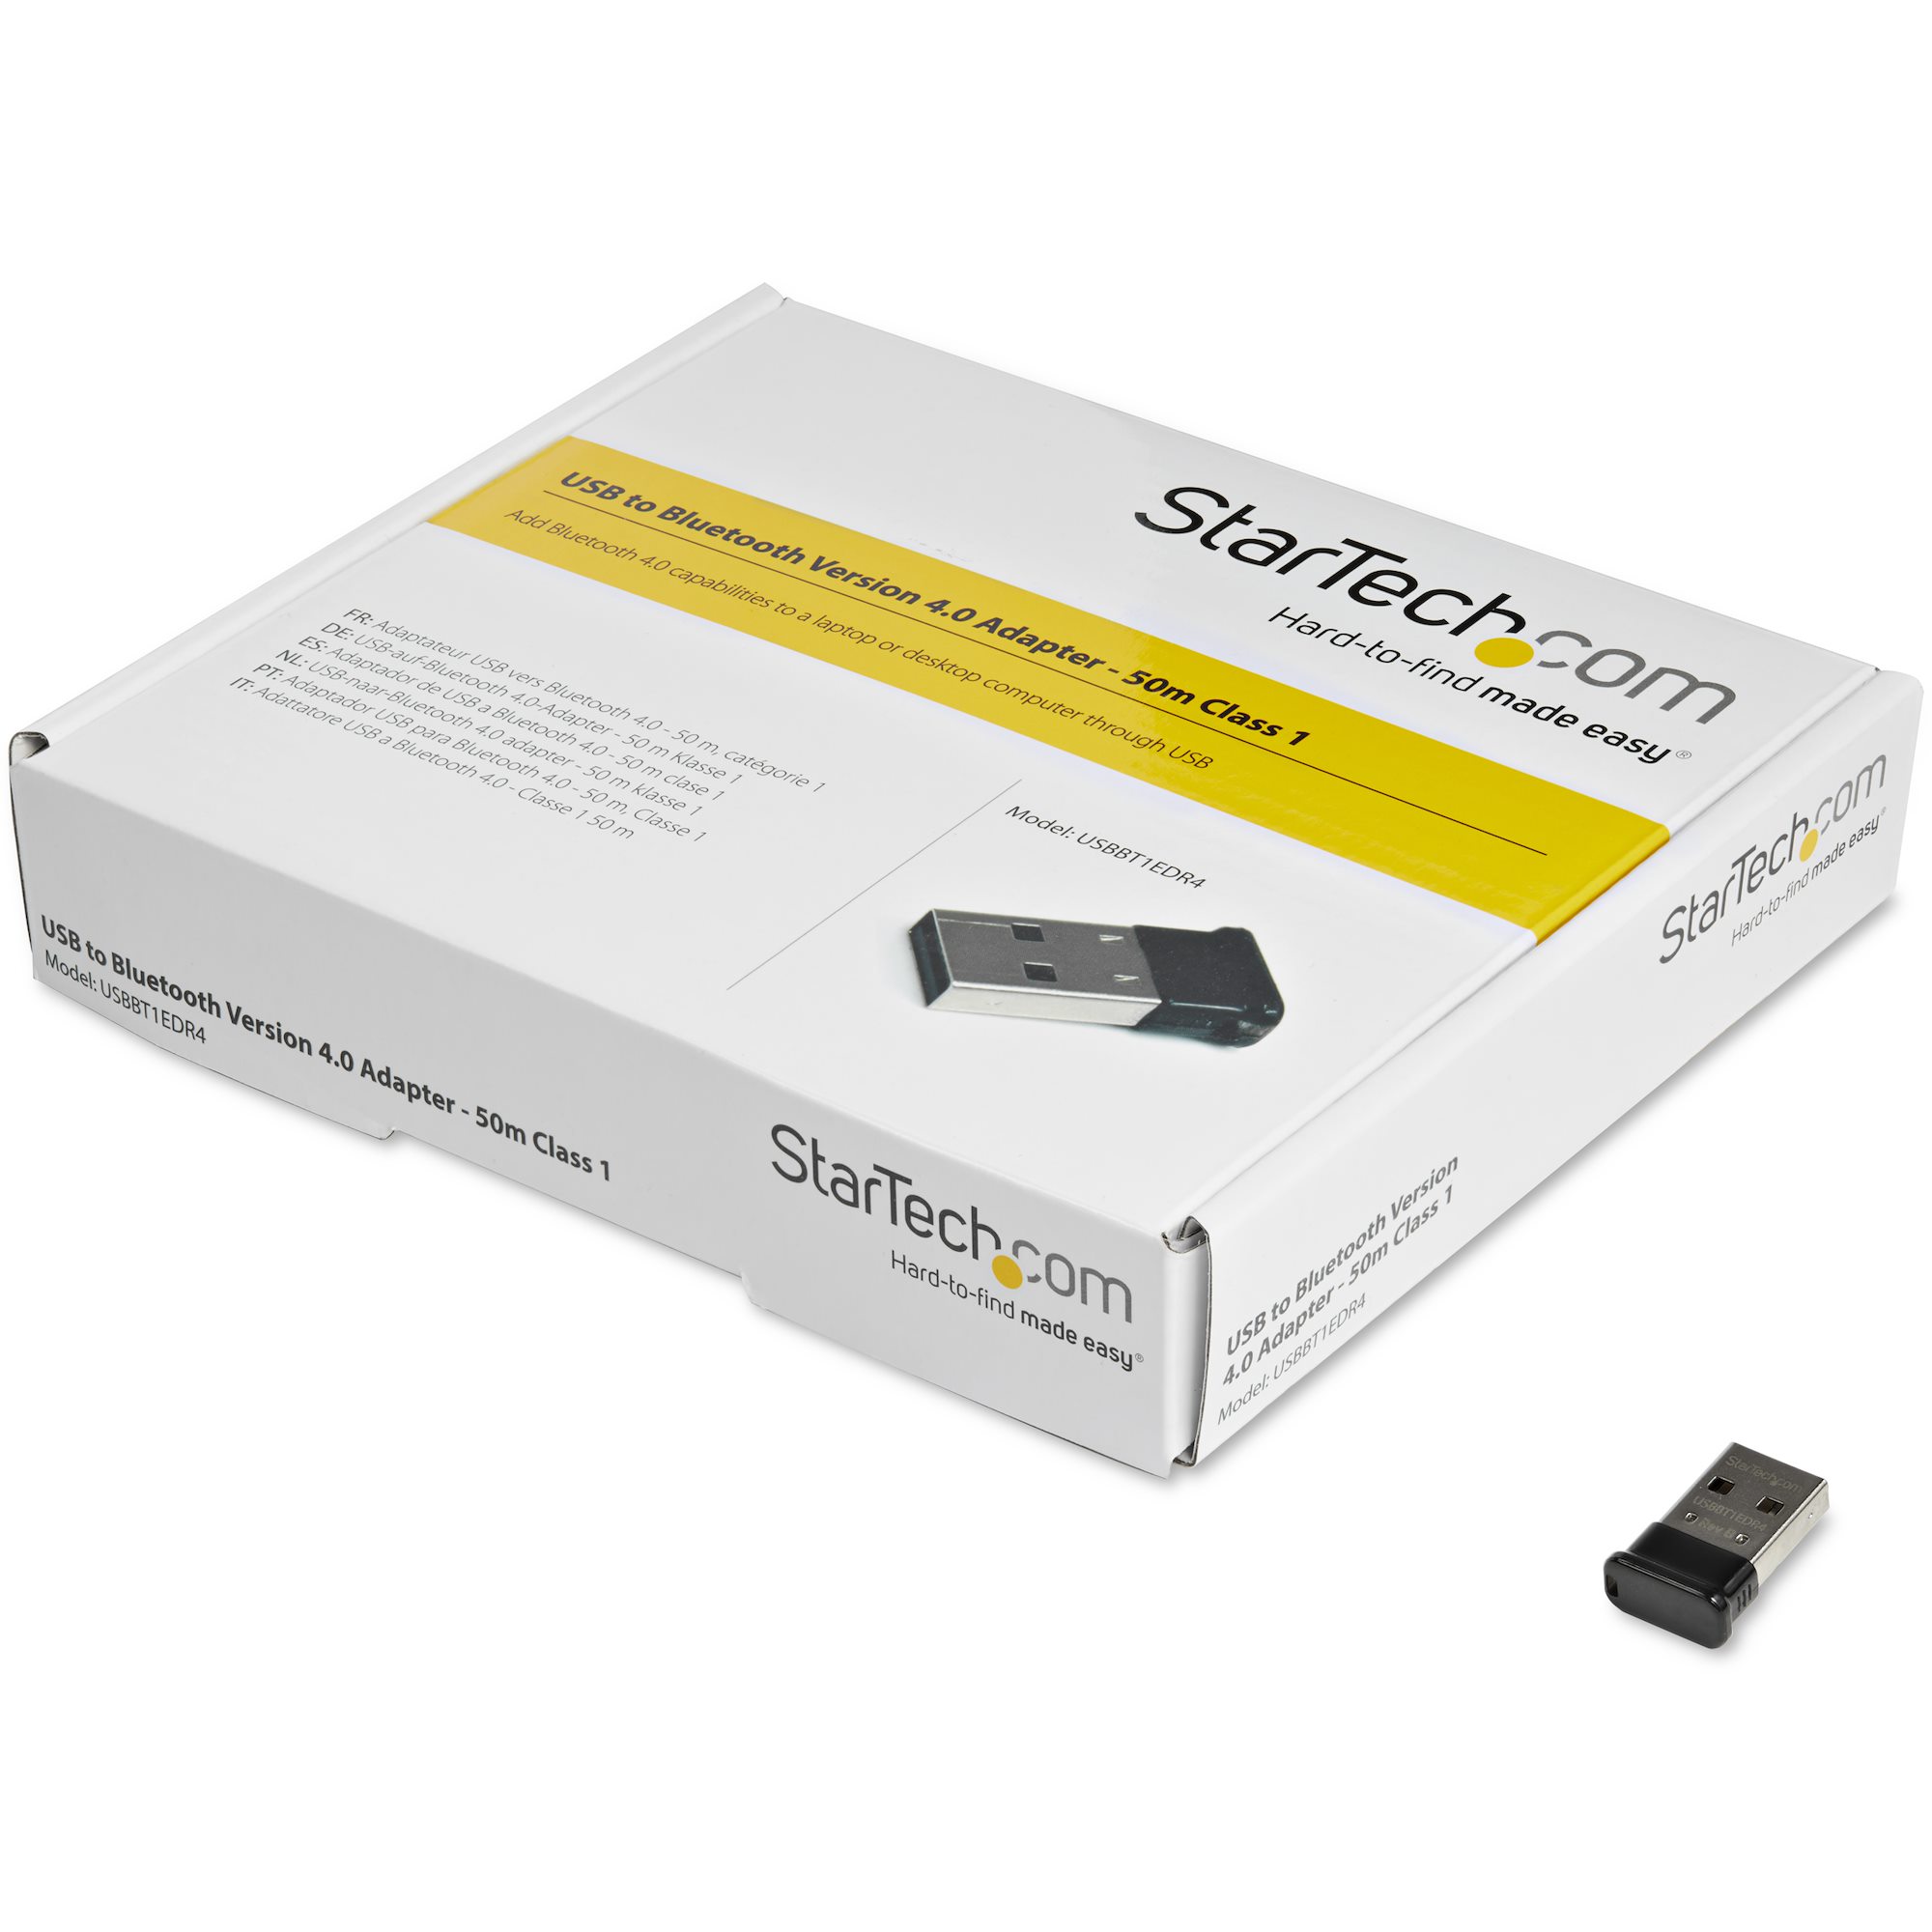 USB 4.0 Adapter 10m Class - Bluetooth & Telecom Adapters |